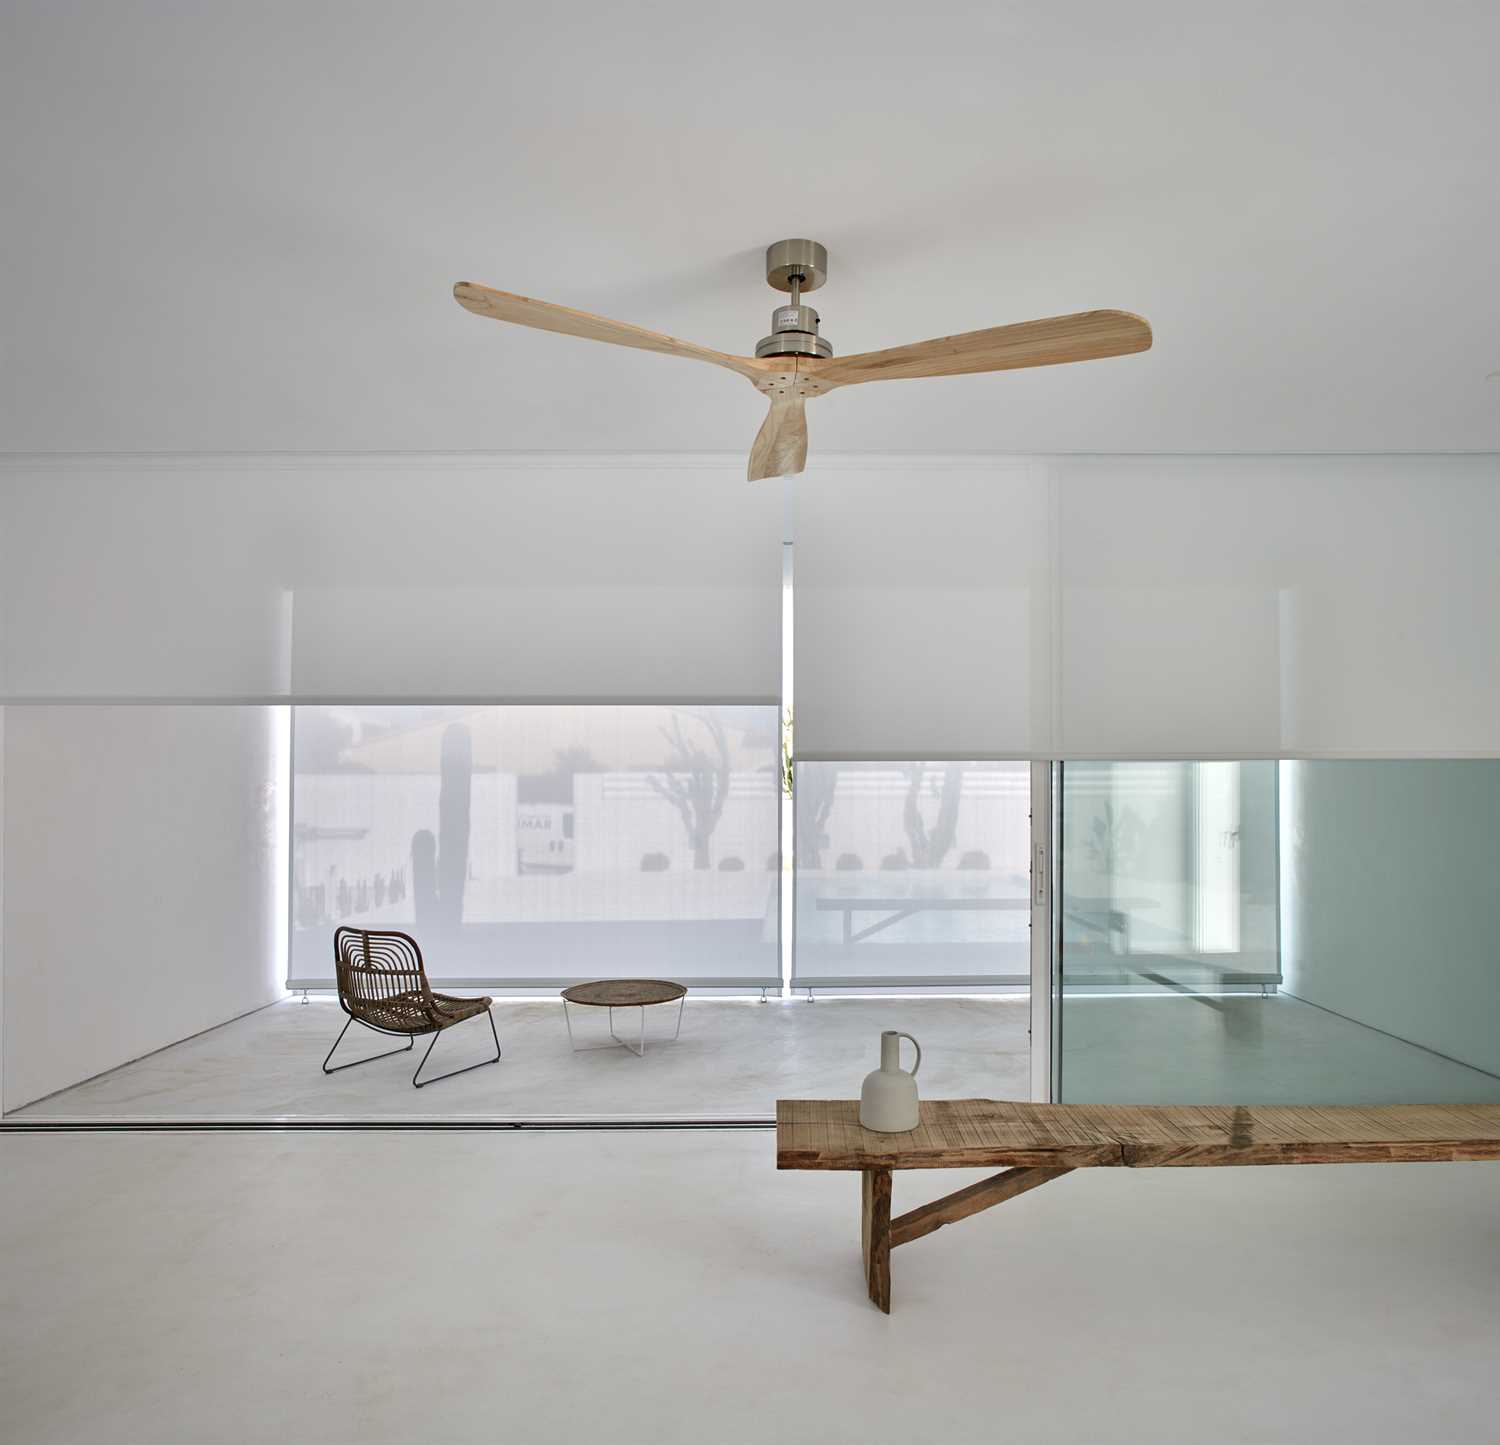 Biely mikrocement na stenách, podlahe a strope obývacej izby.